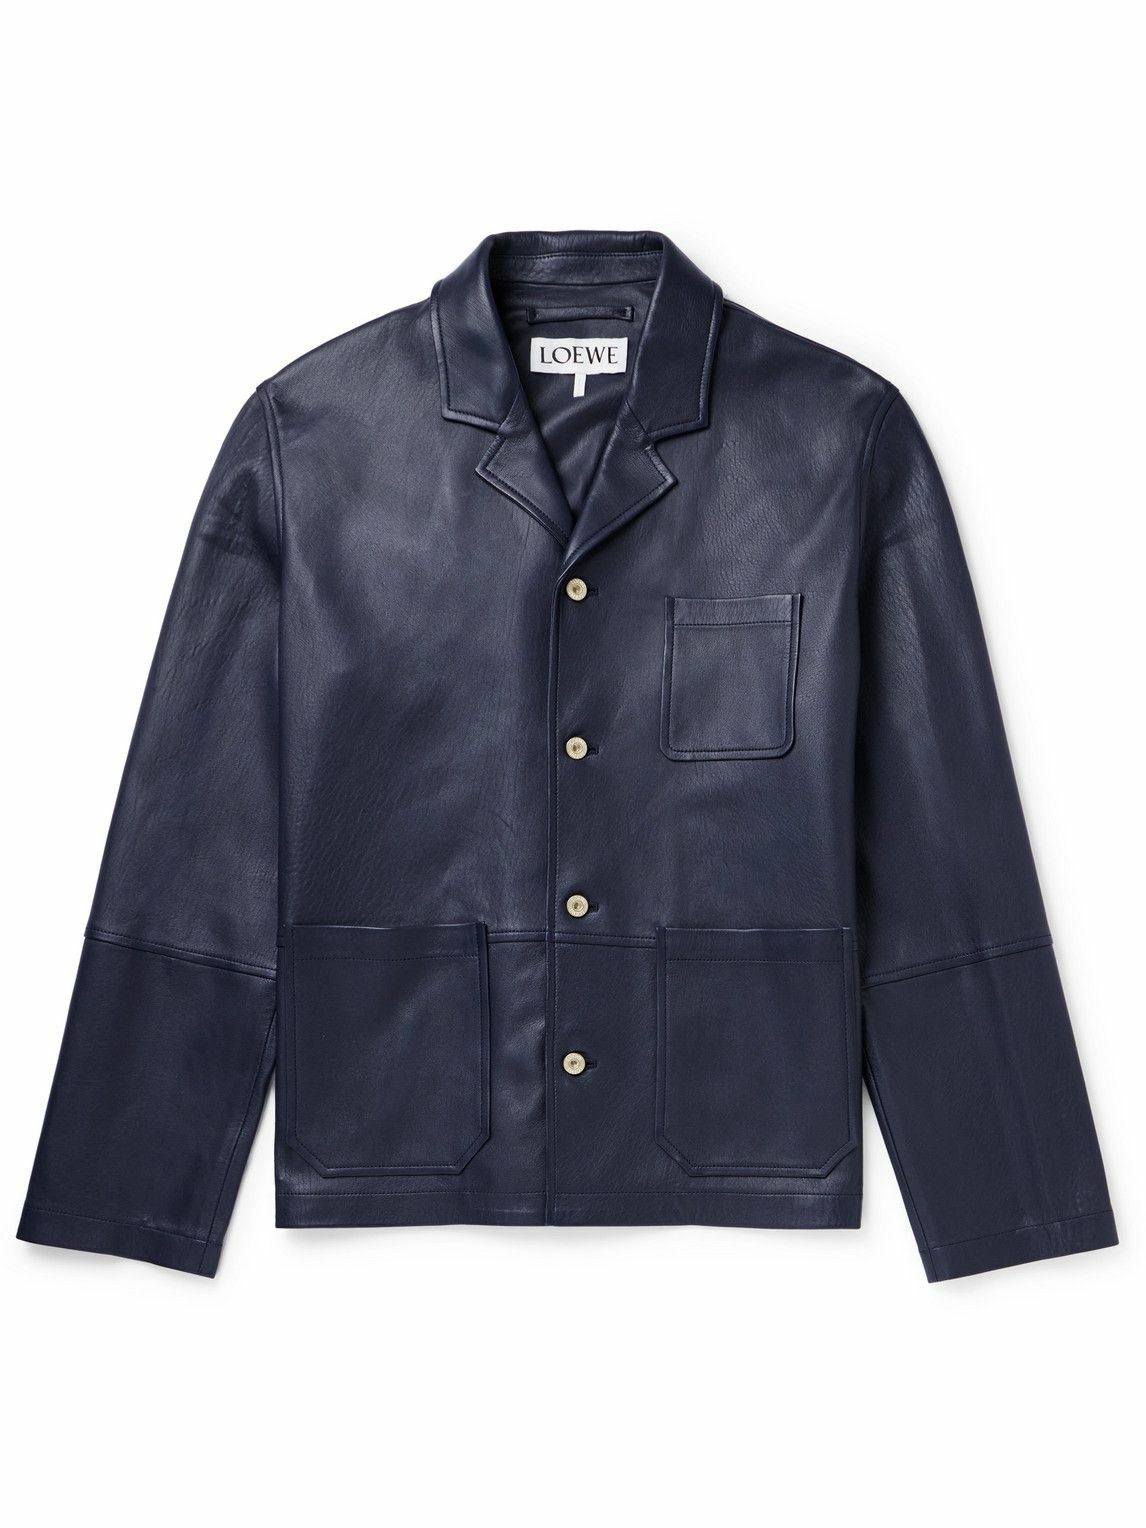 LOEWE - Leather Jacket - Blue Loewe